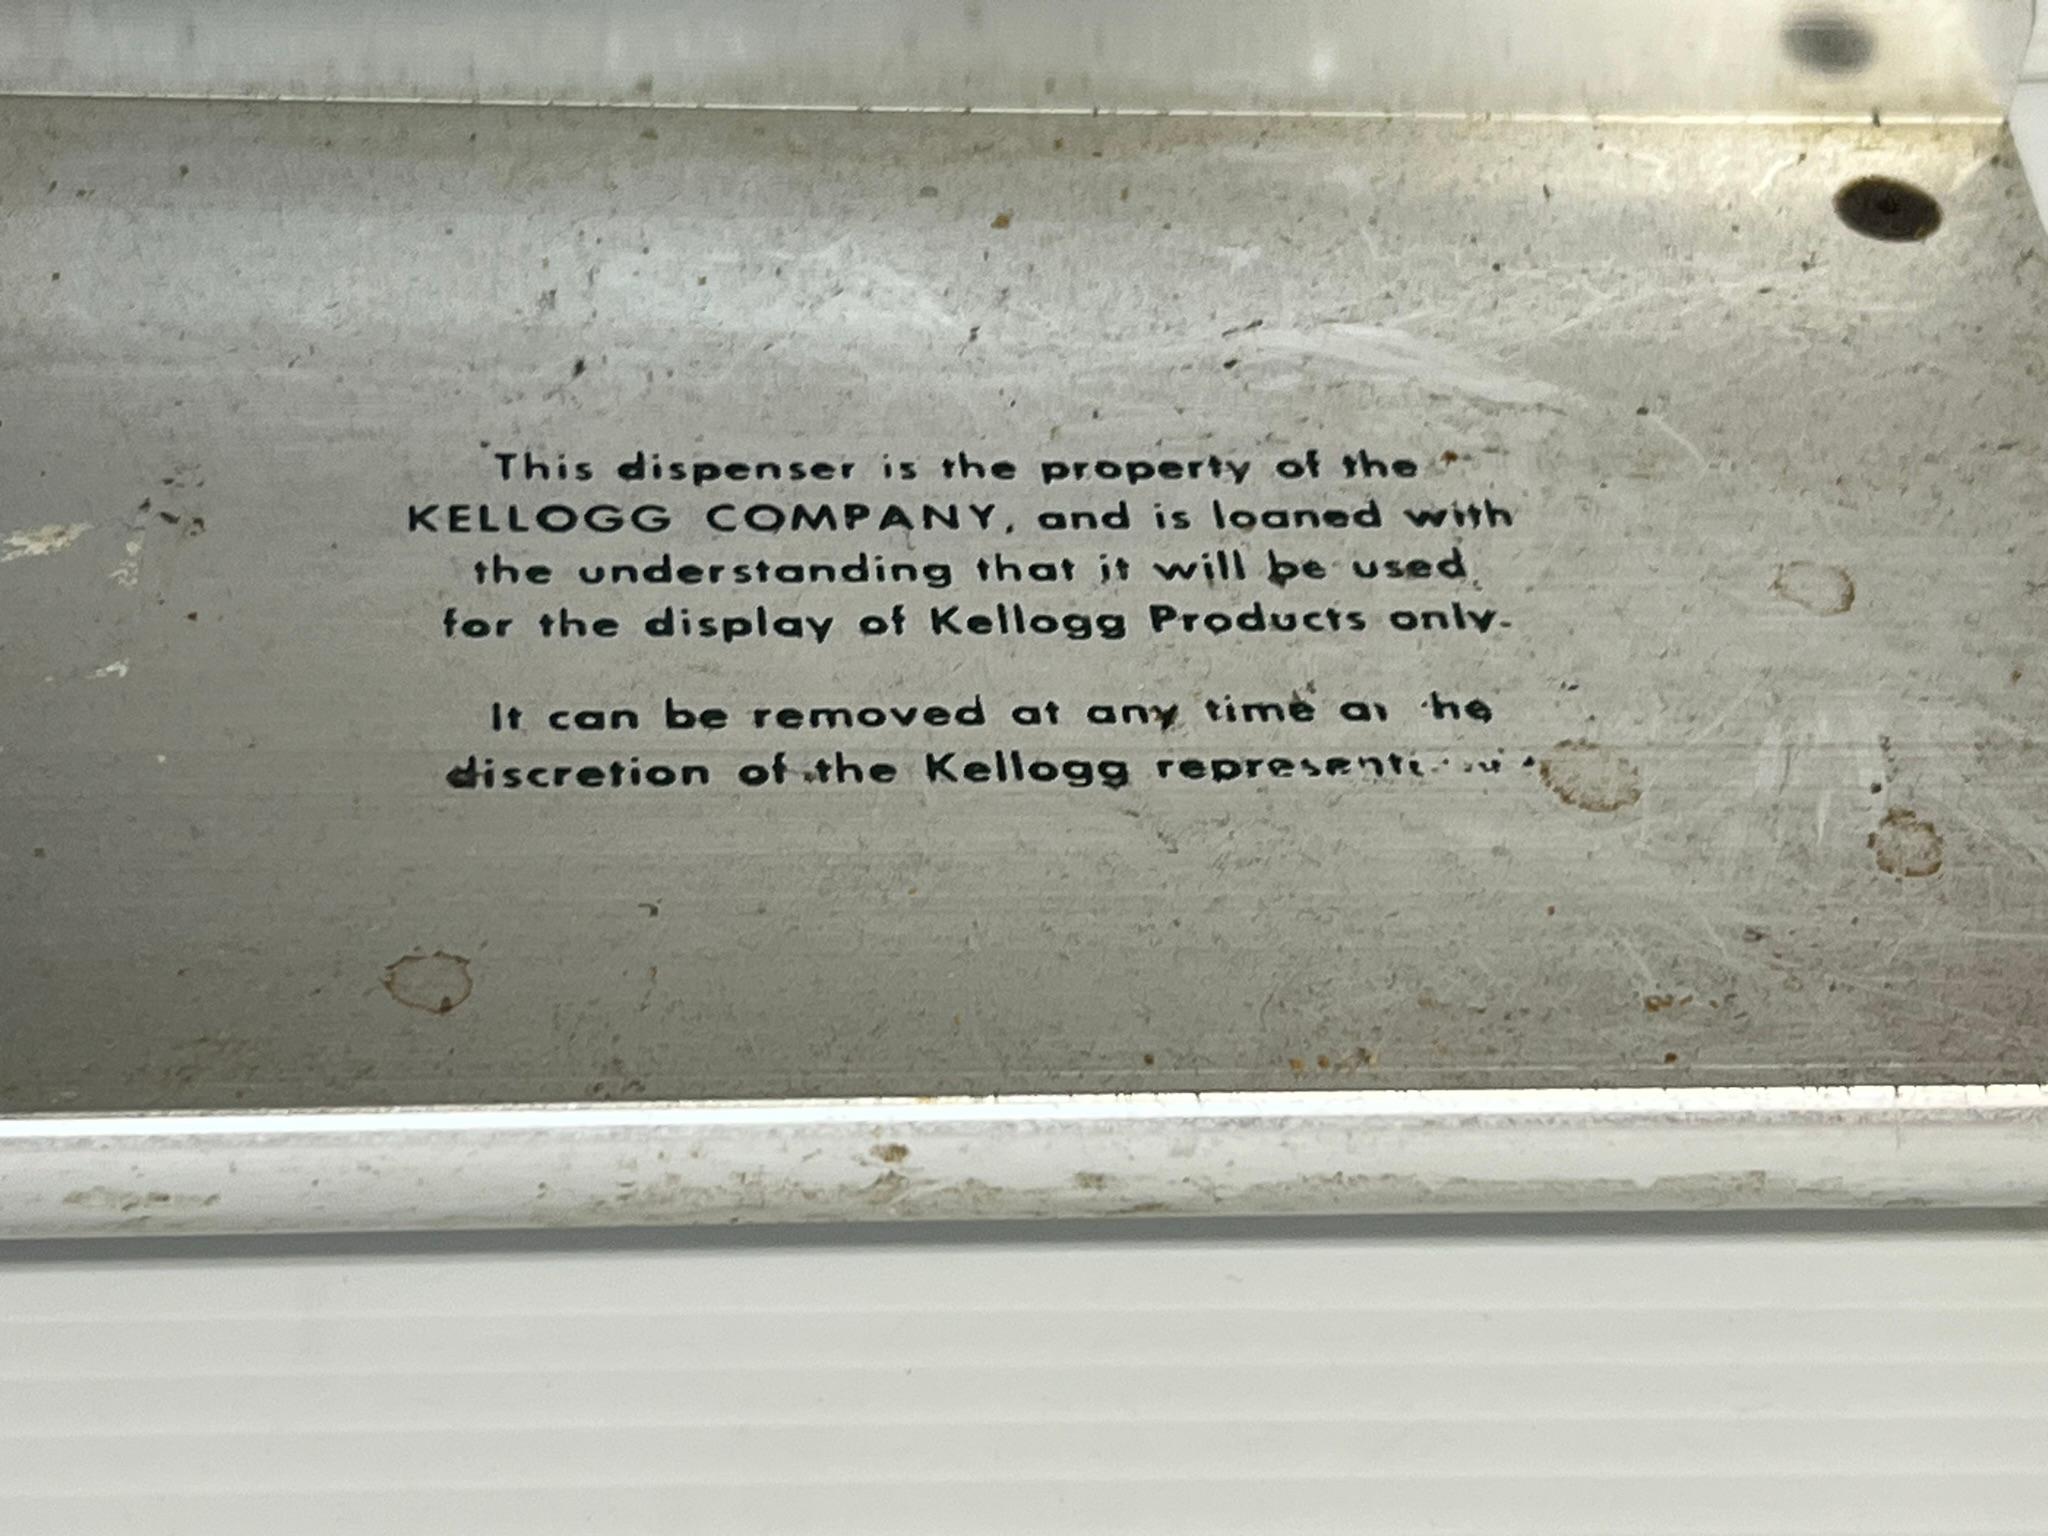 Stainless Steel "Kellogg's" Display Rack